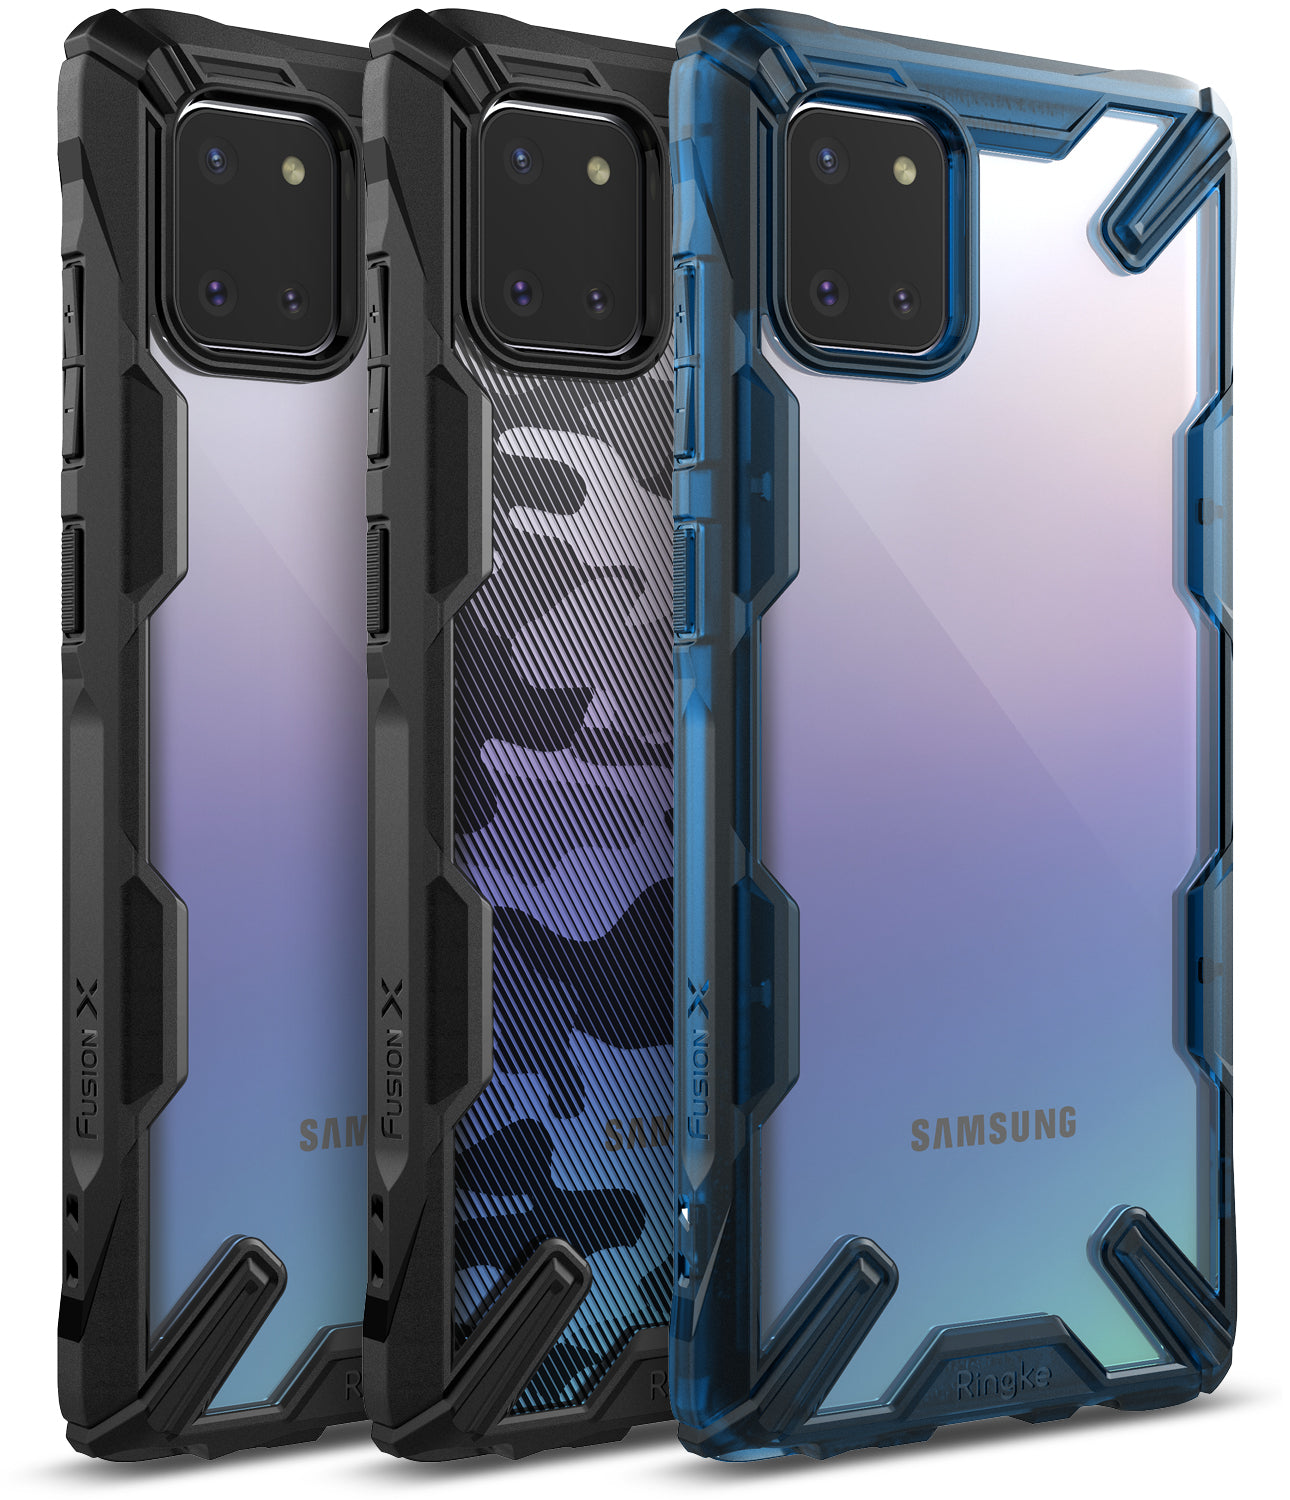 Ringke Fusion-X Case designed for Galaxy Note 10 Lite 2020, Black, Camo Black, Space Blue